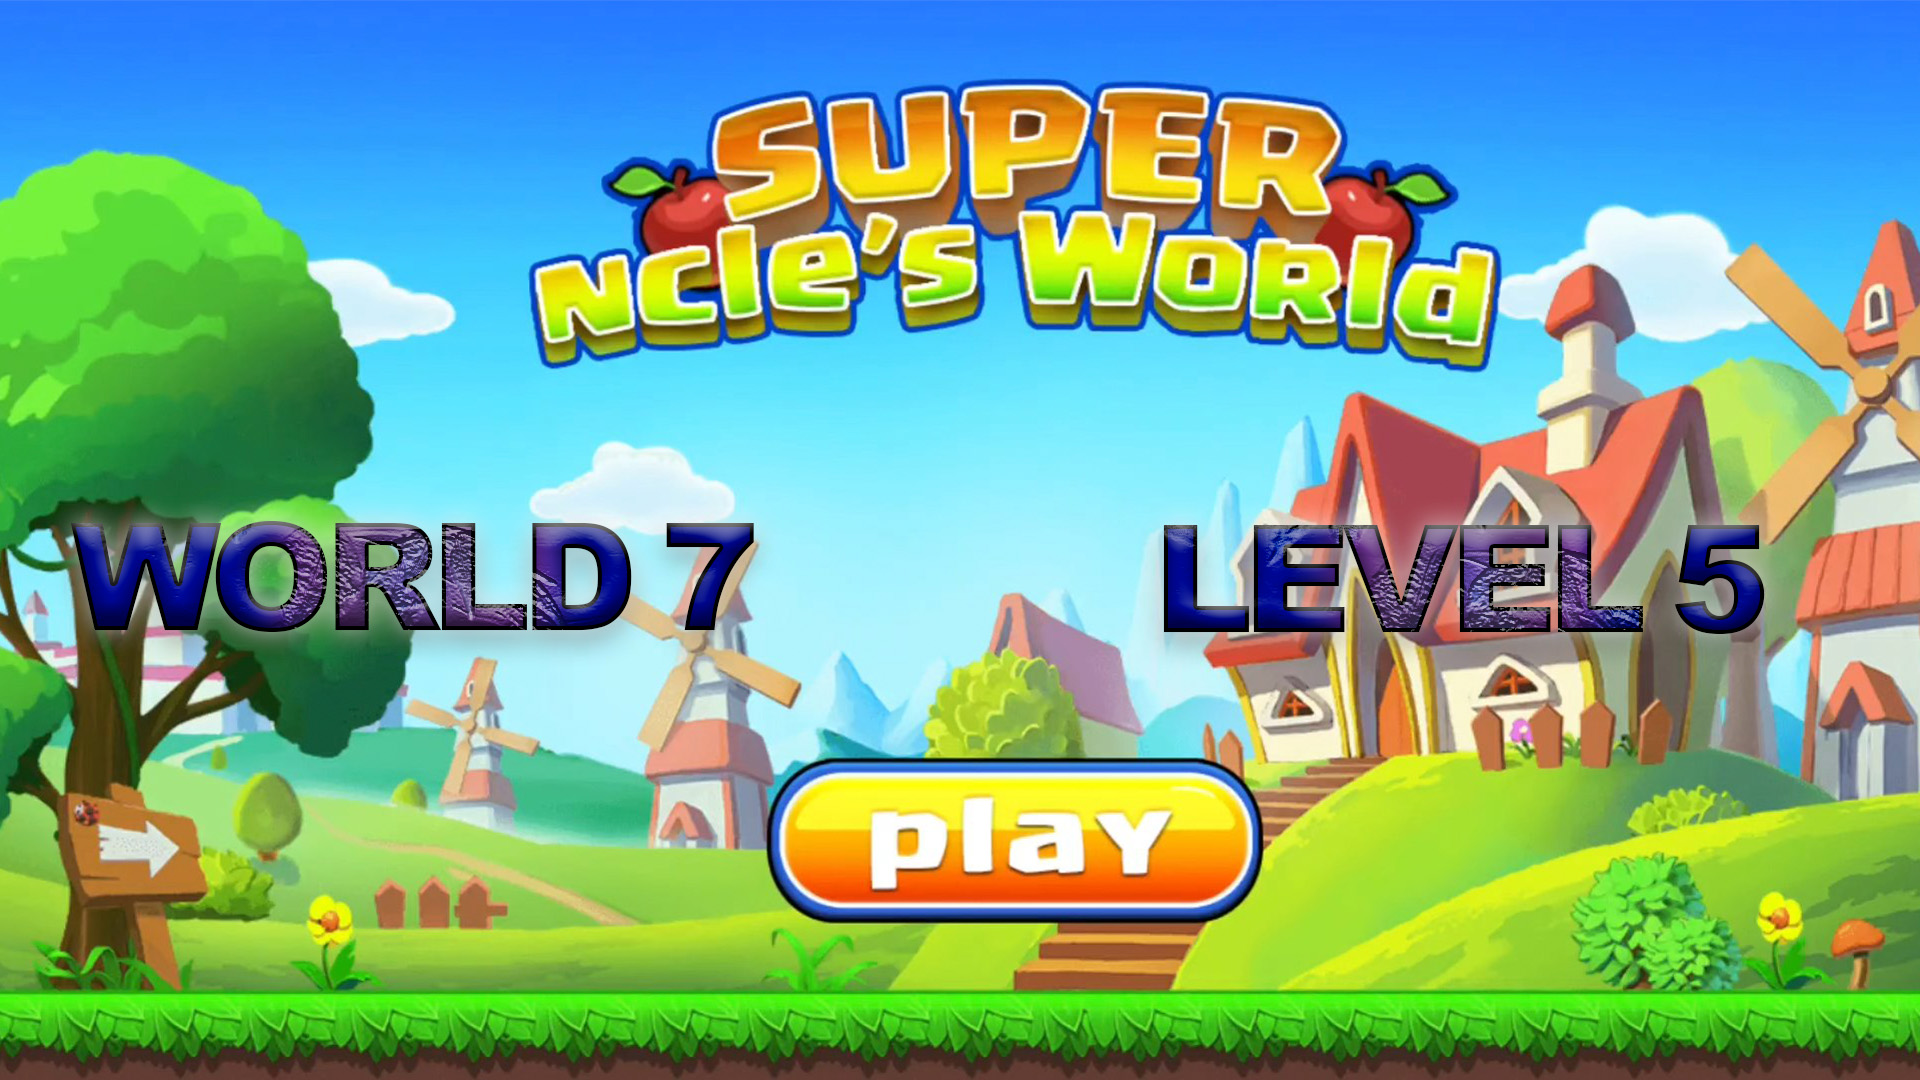 Super ncle's  World 7. Level 5.